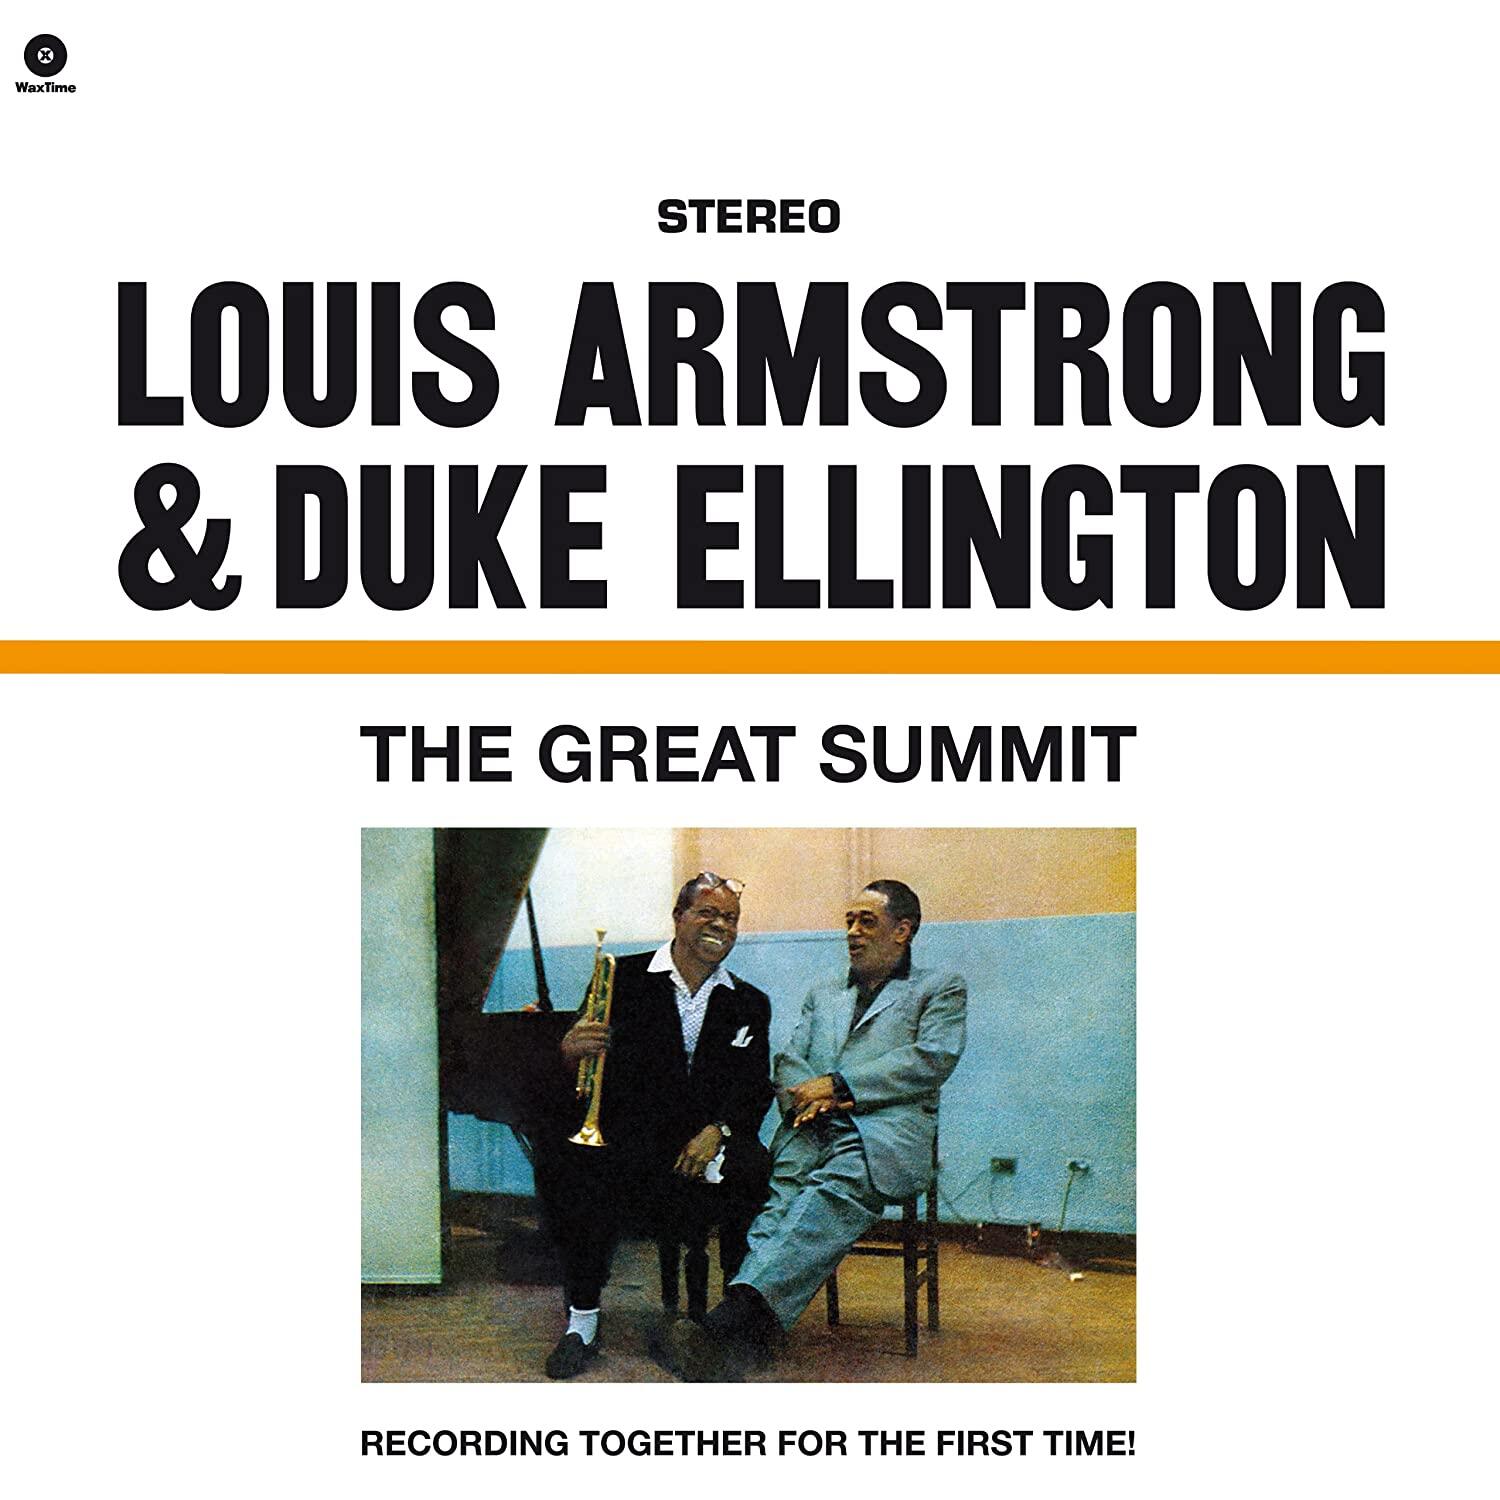 Armstrong, Louis & Duke Ellington: The Great Summit (Vinyl LP)